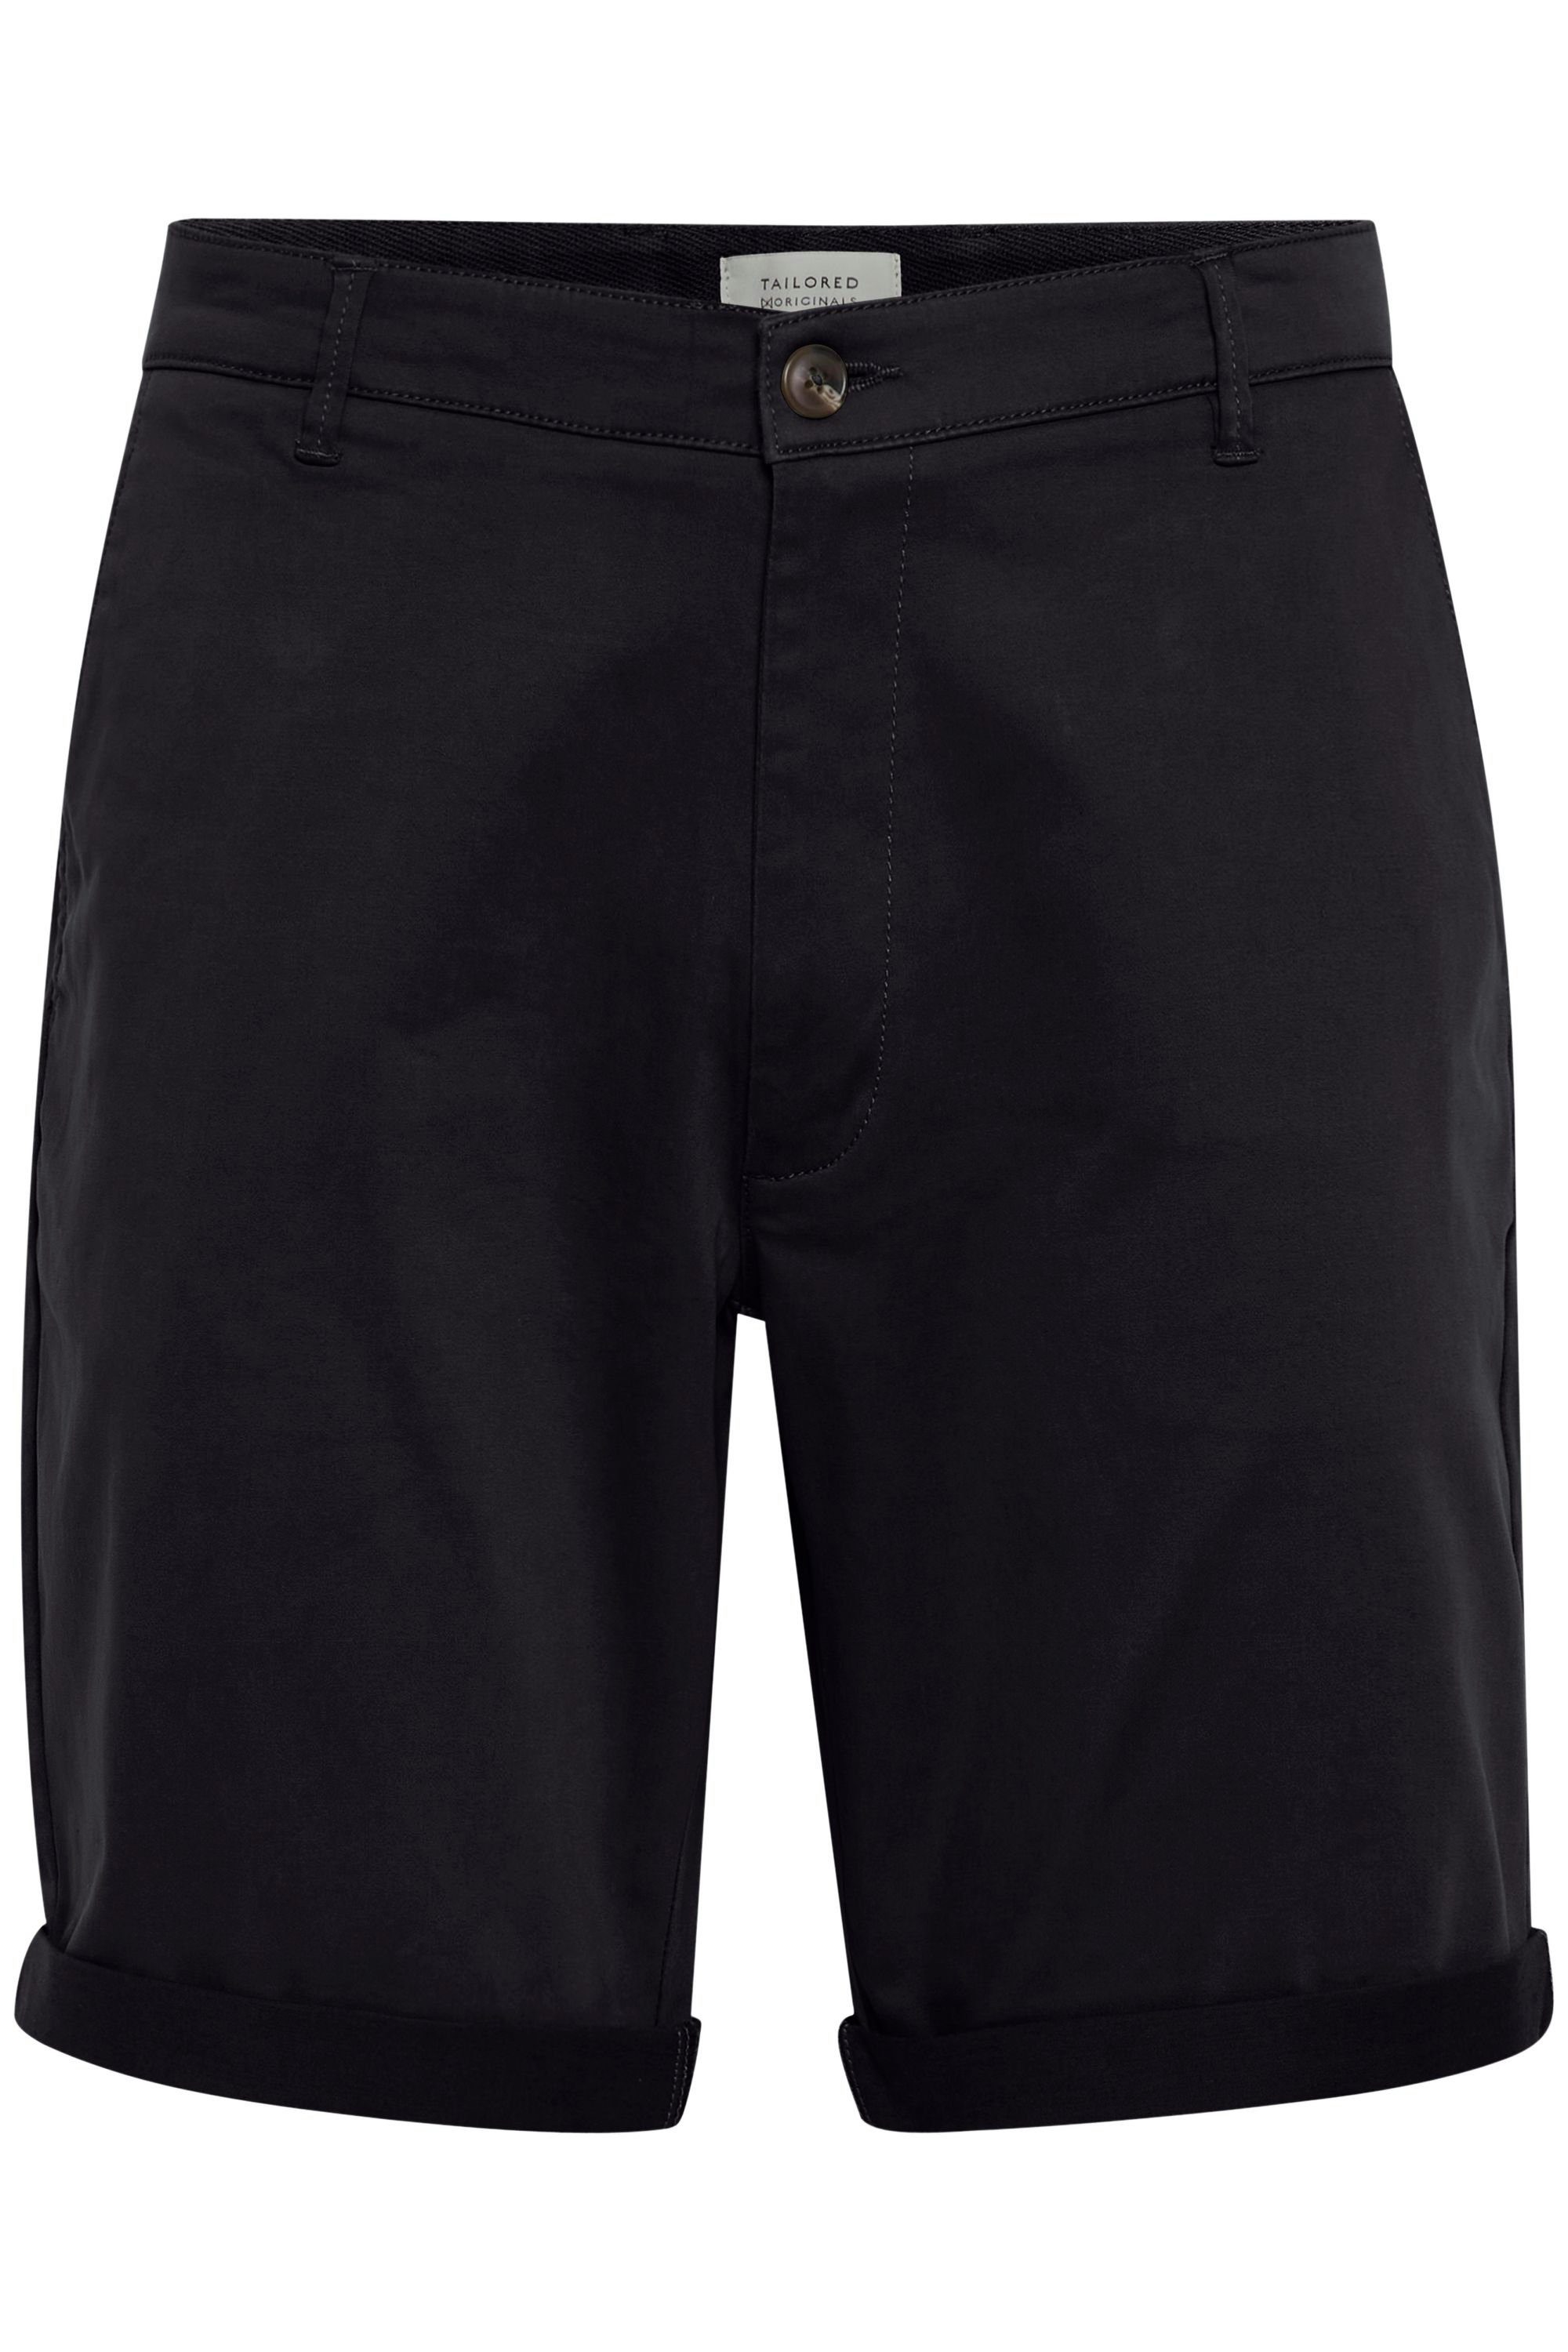 Solid Shorts 7193106, Shorts Hose B Rockcliffe - mit Kurze 21200395 INSIGNIA - (791991) Knopfverschluss